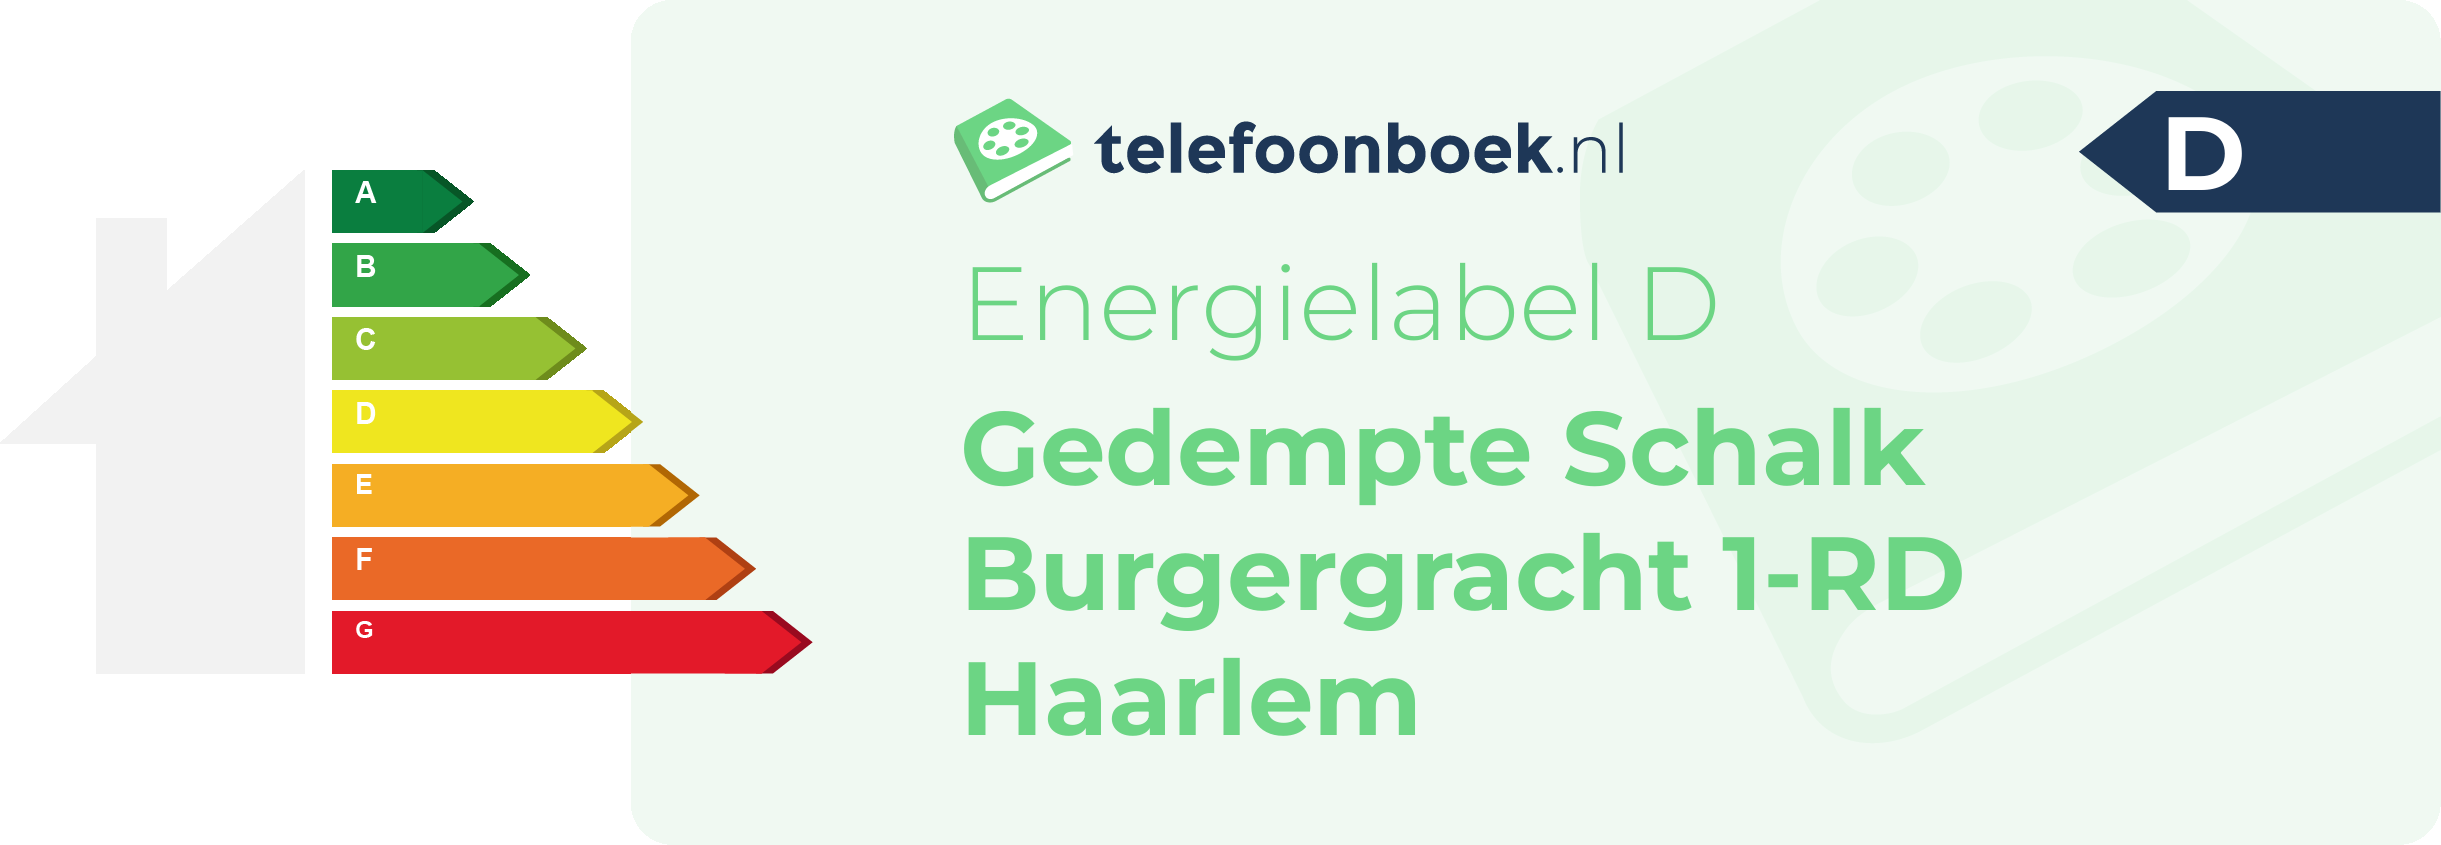 Energielabel Gedempte Schalk Burgergracht 1-RD Haarlem